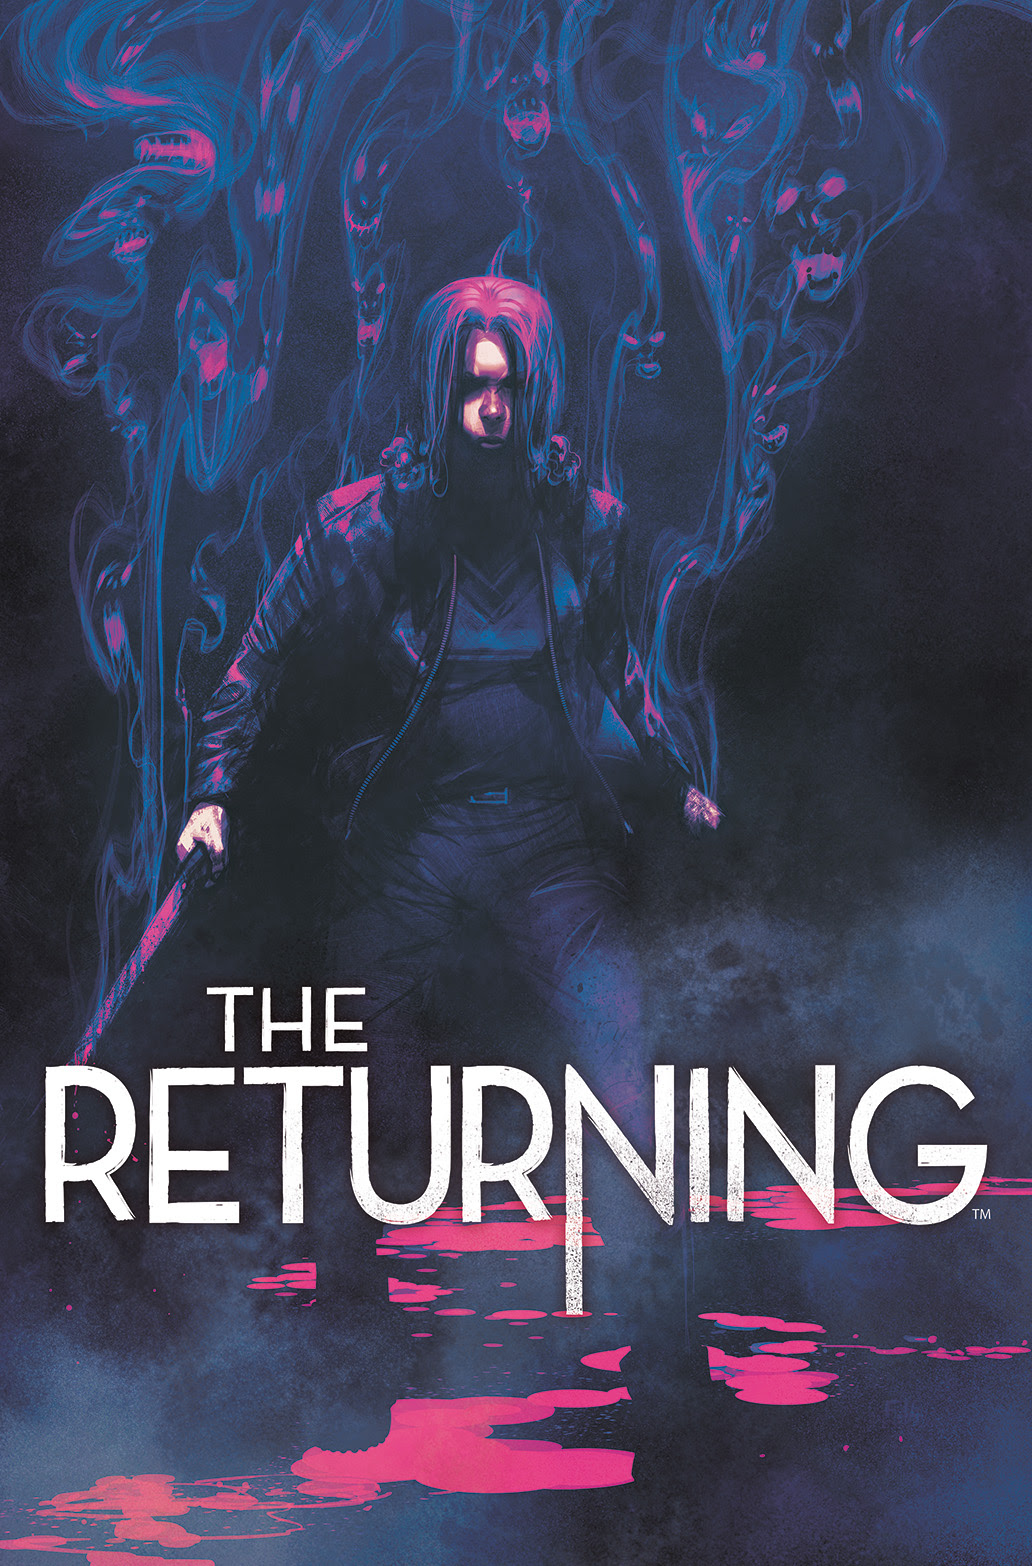 THE RETURNING #4 Cover by Frazer Irving